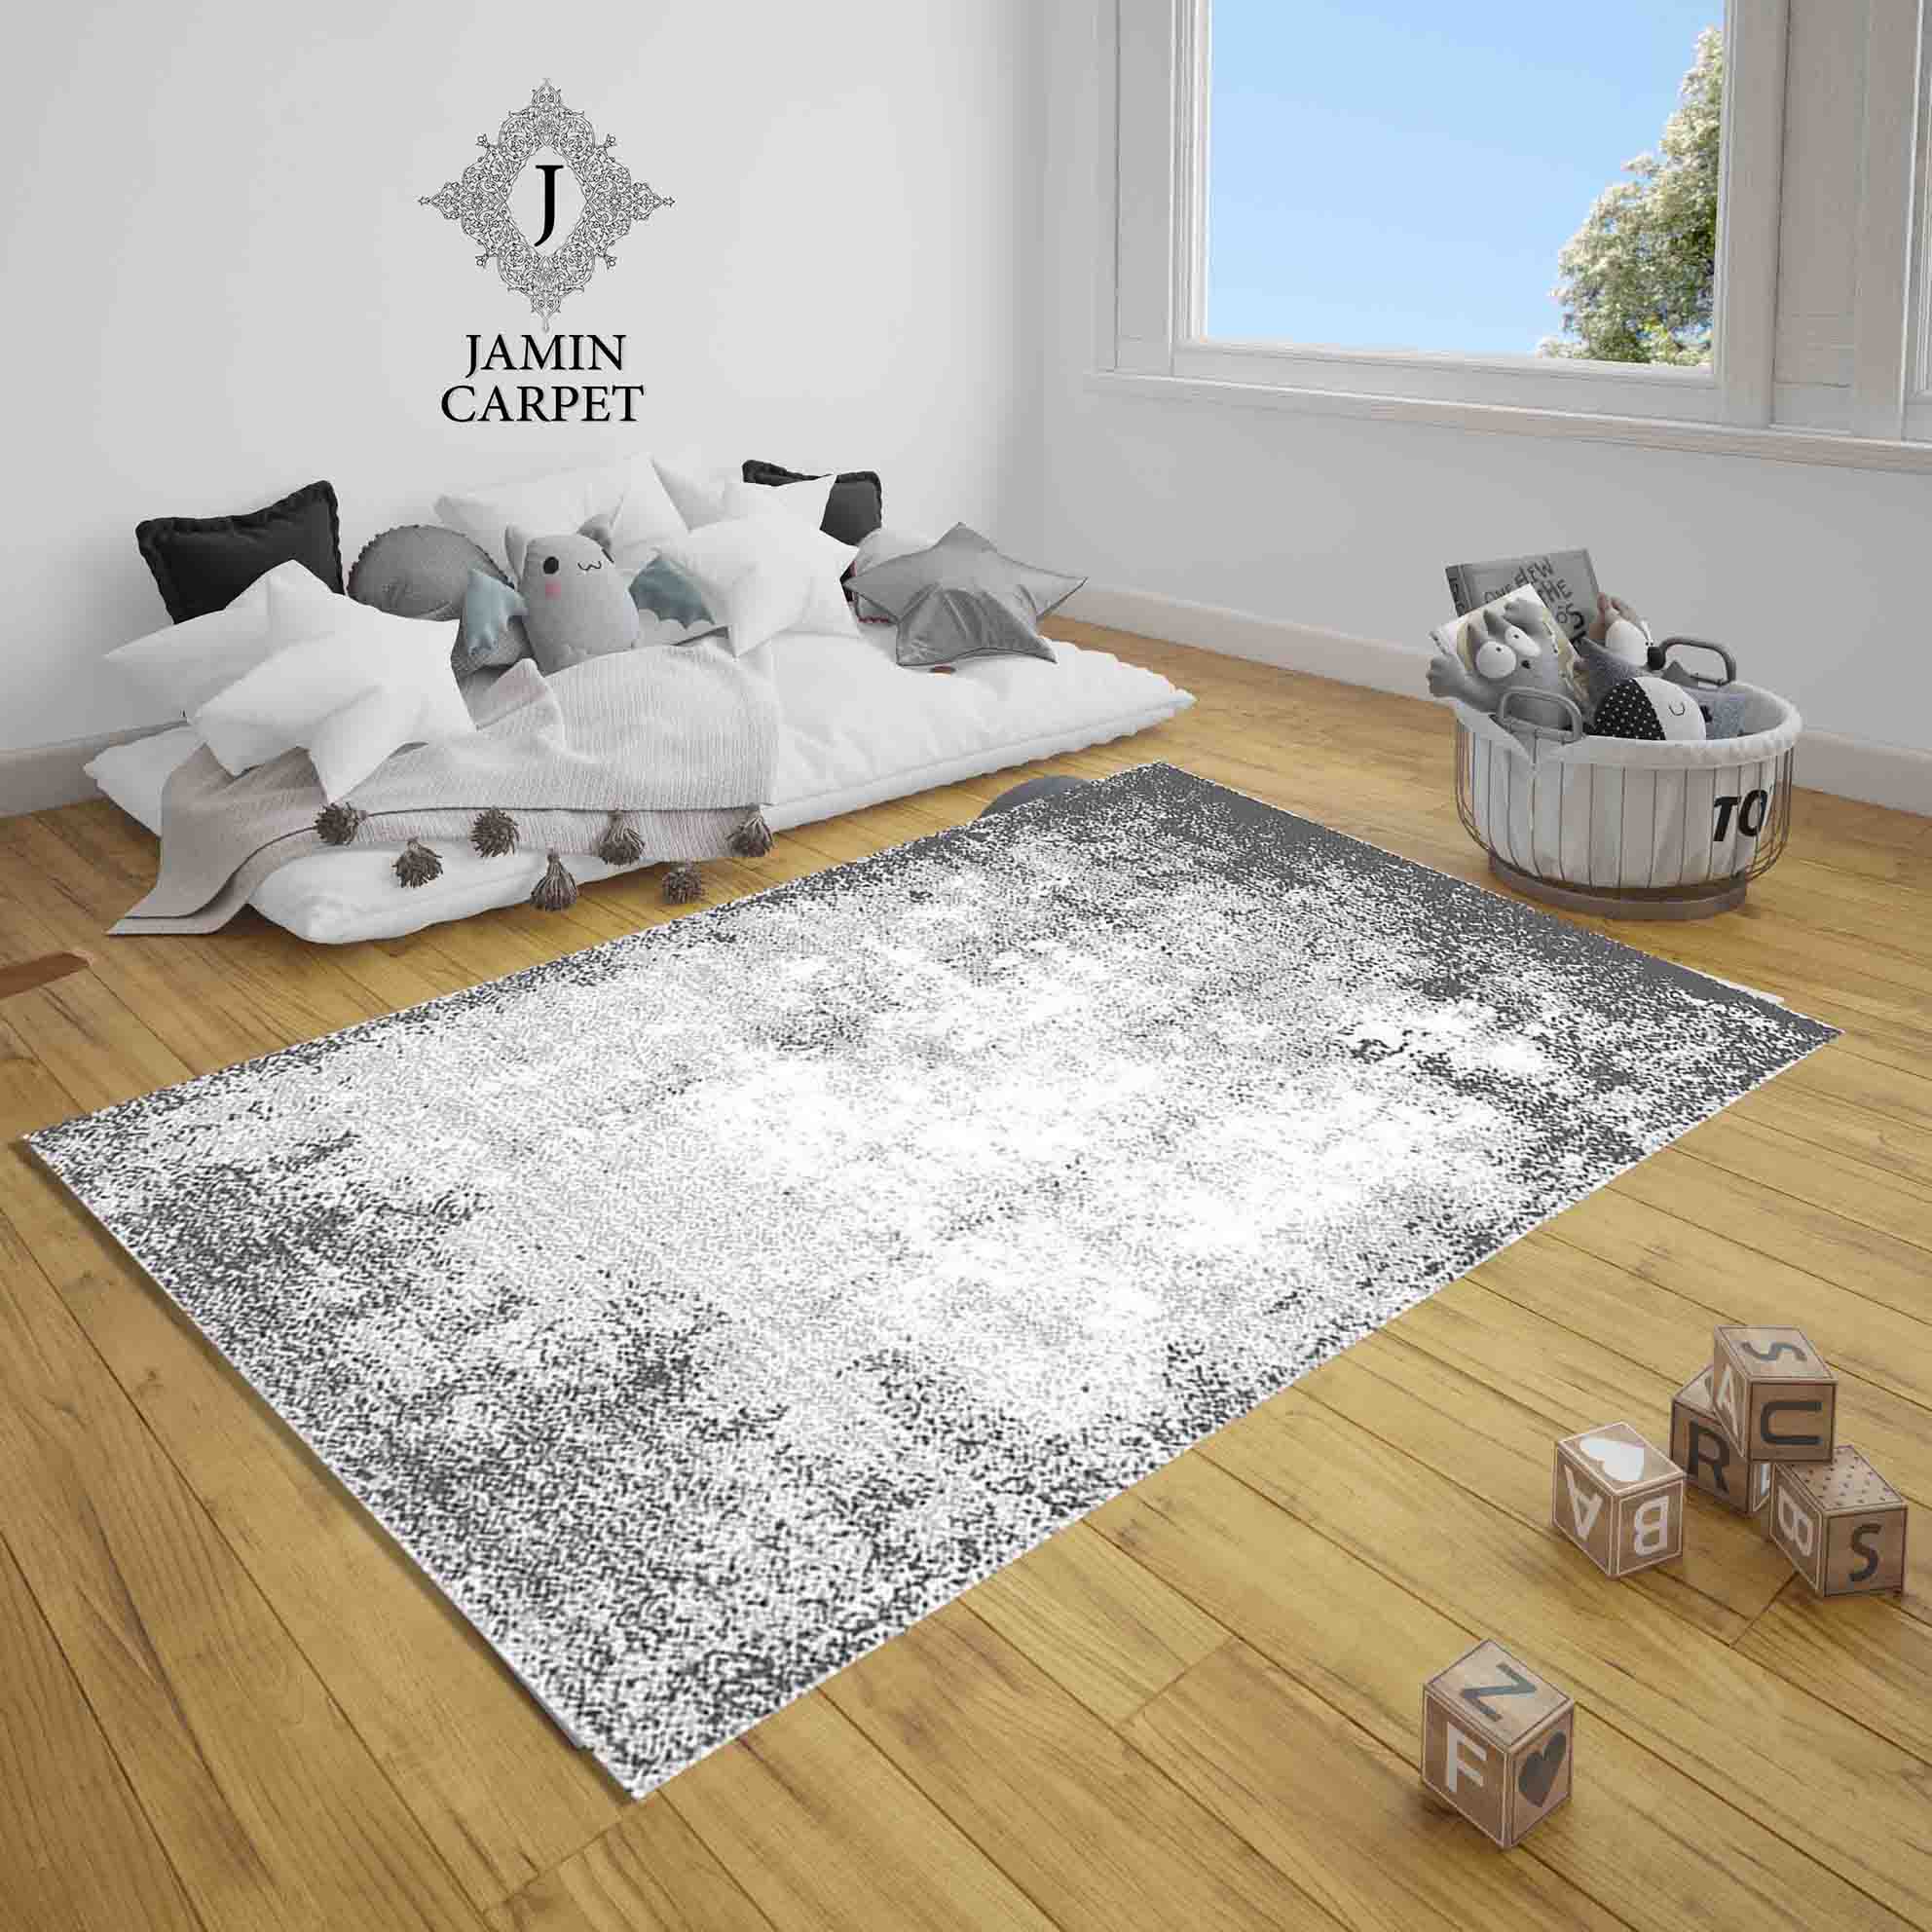 Fantasy carpet, code 273, comb 400, density 1800, all acrylic